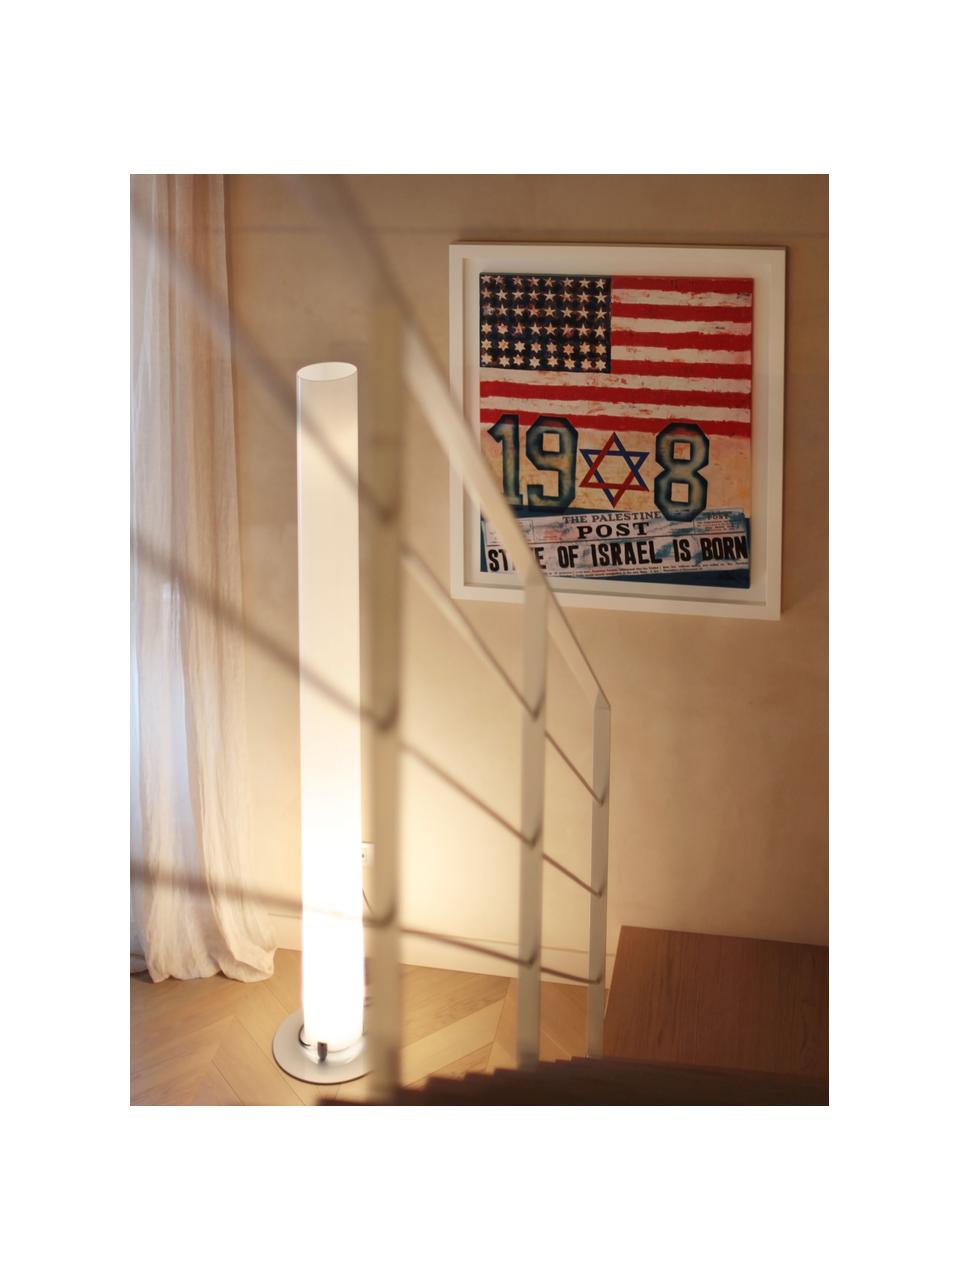 Große Stehlampe Stylos, Lampenschirm: Kunststoff, Weiß, Silberfarben, H 200 cm